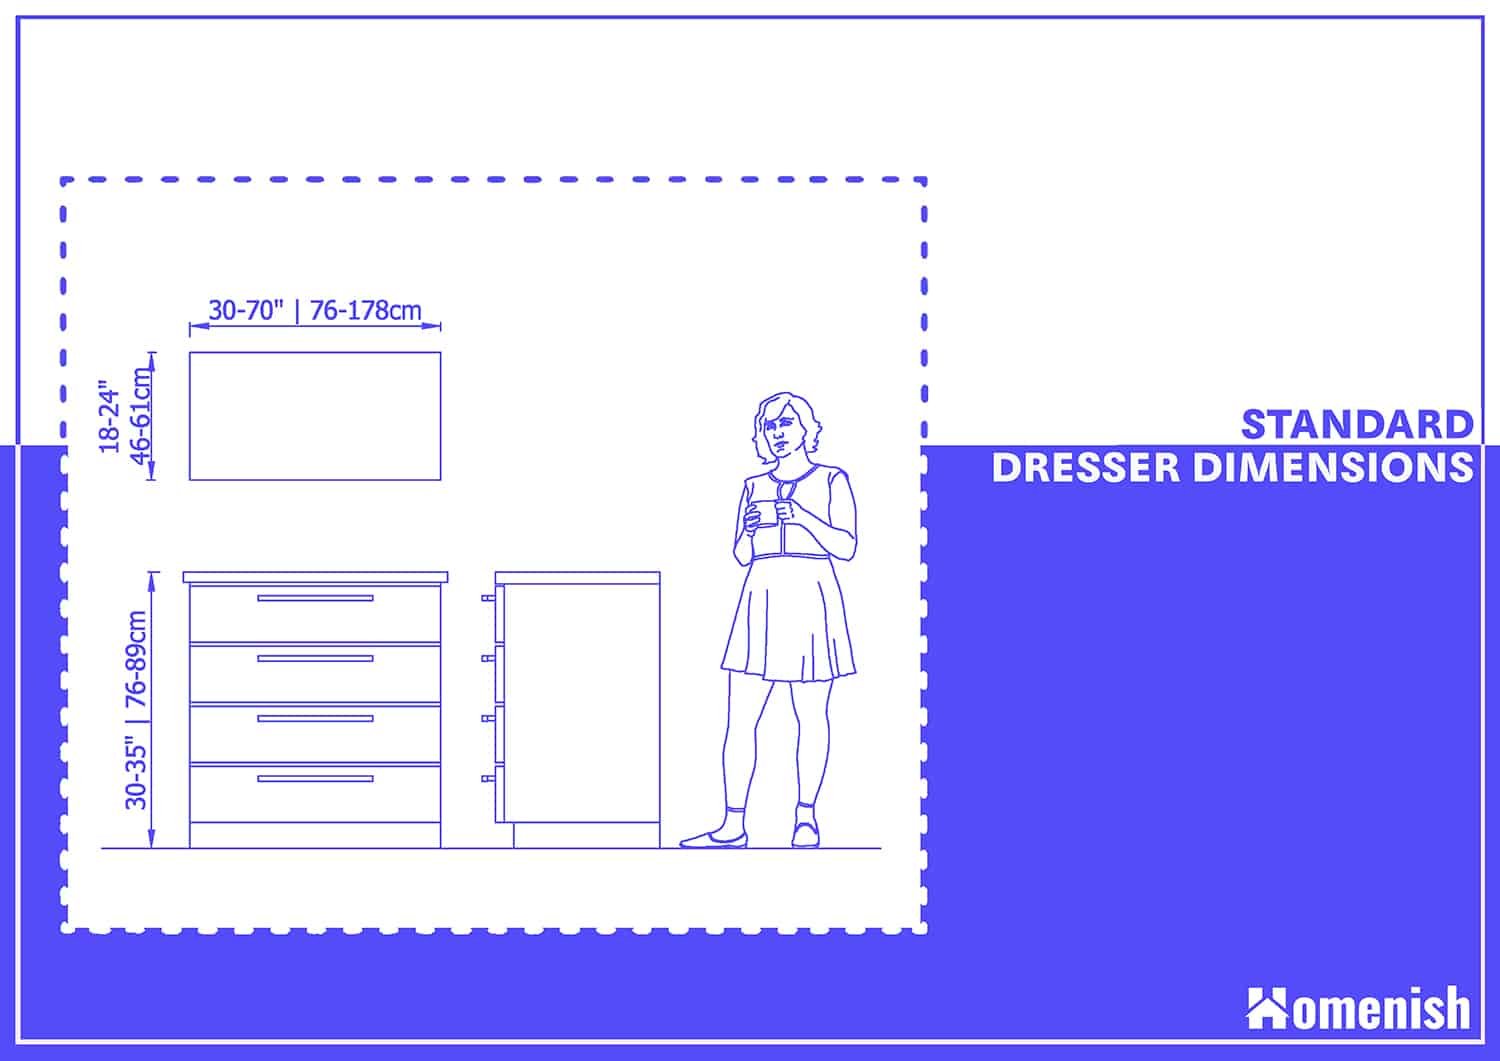 Guide To Standard Dresser Dimensions, Typical Dresser Drawer Depth